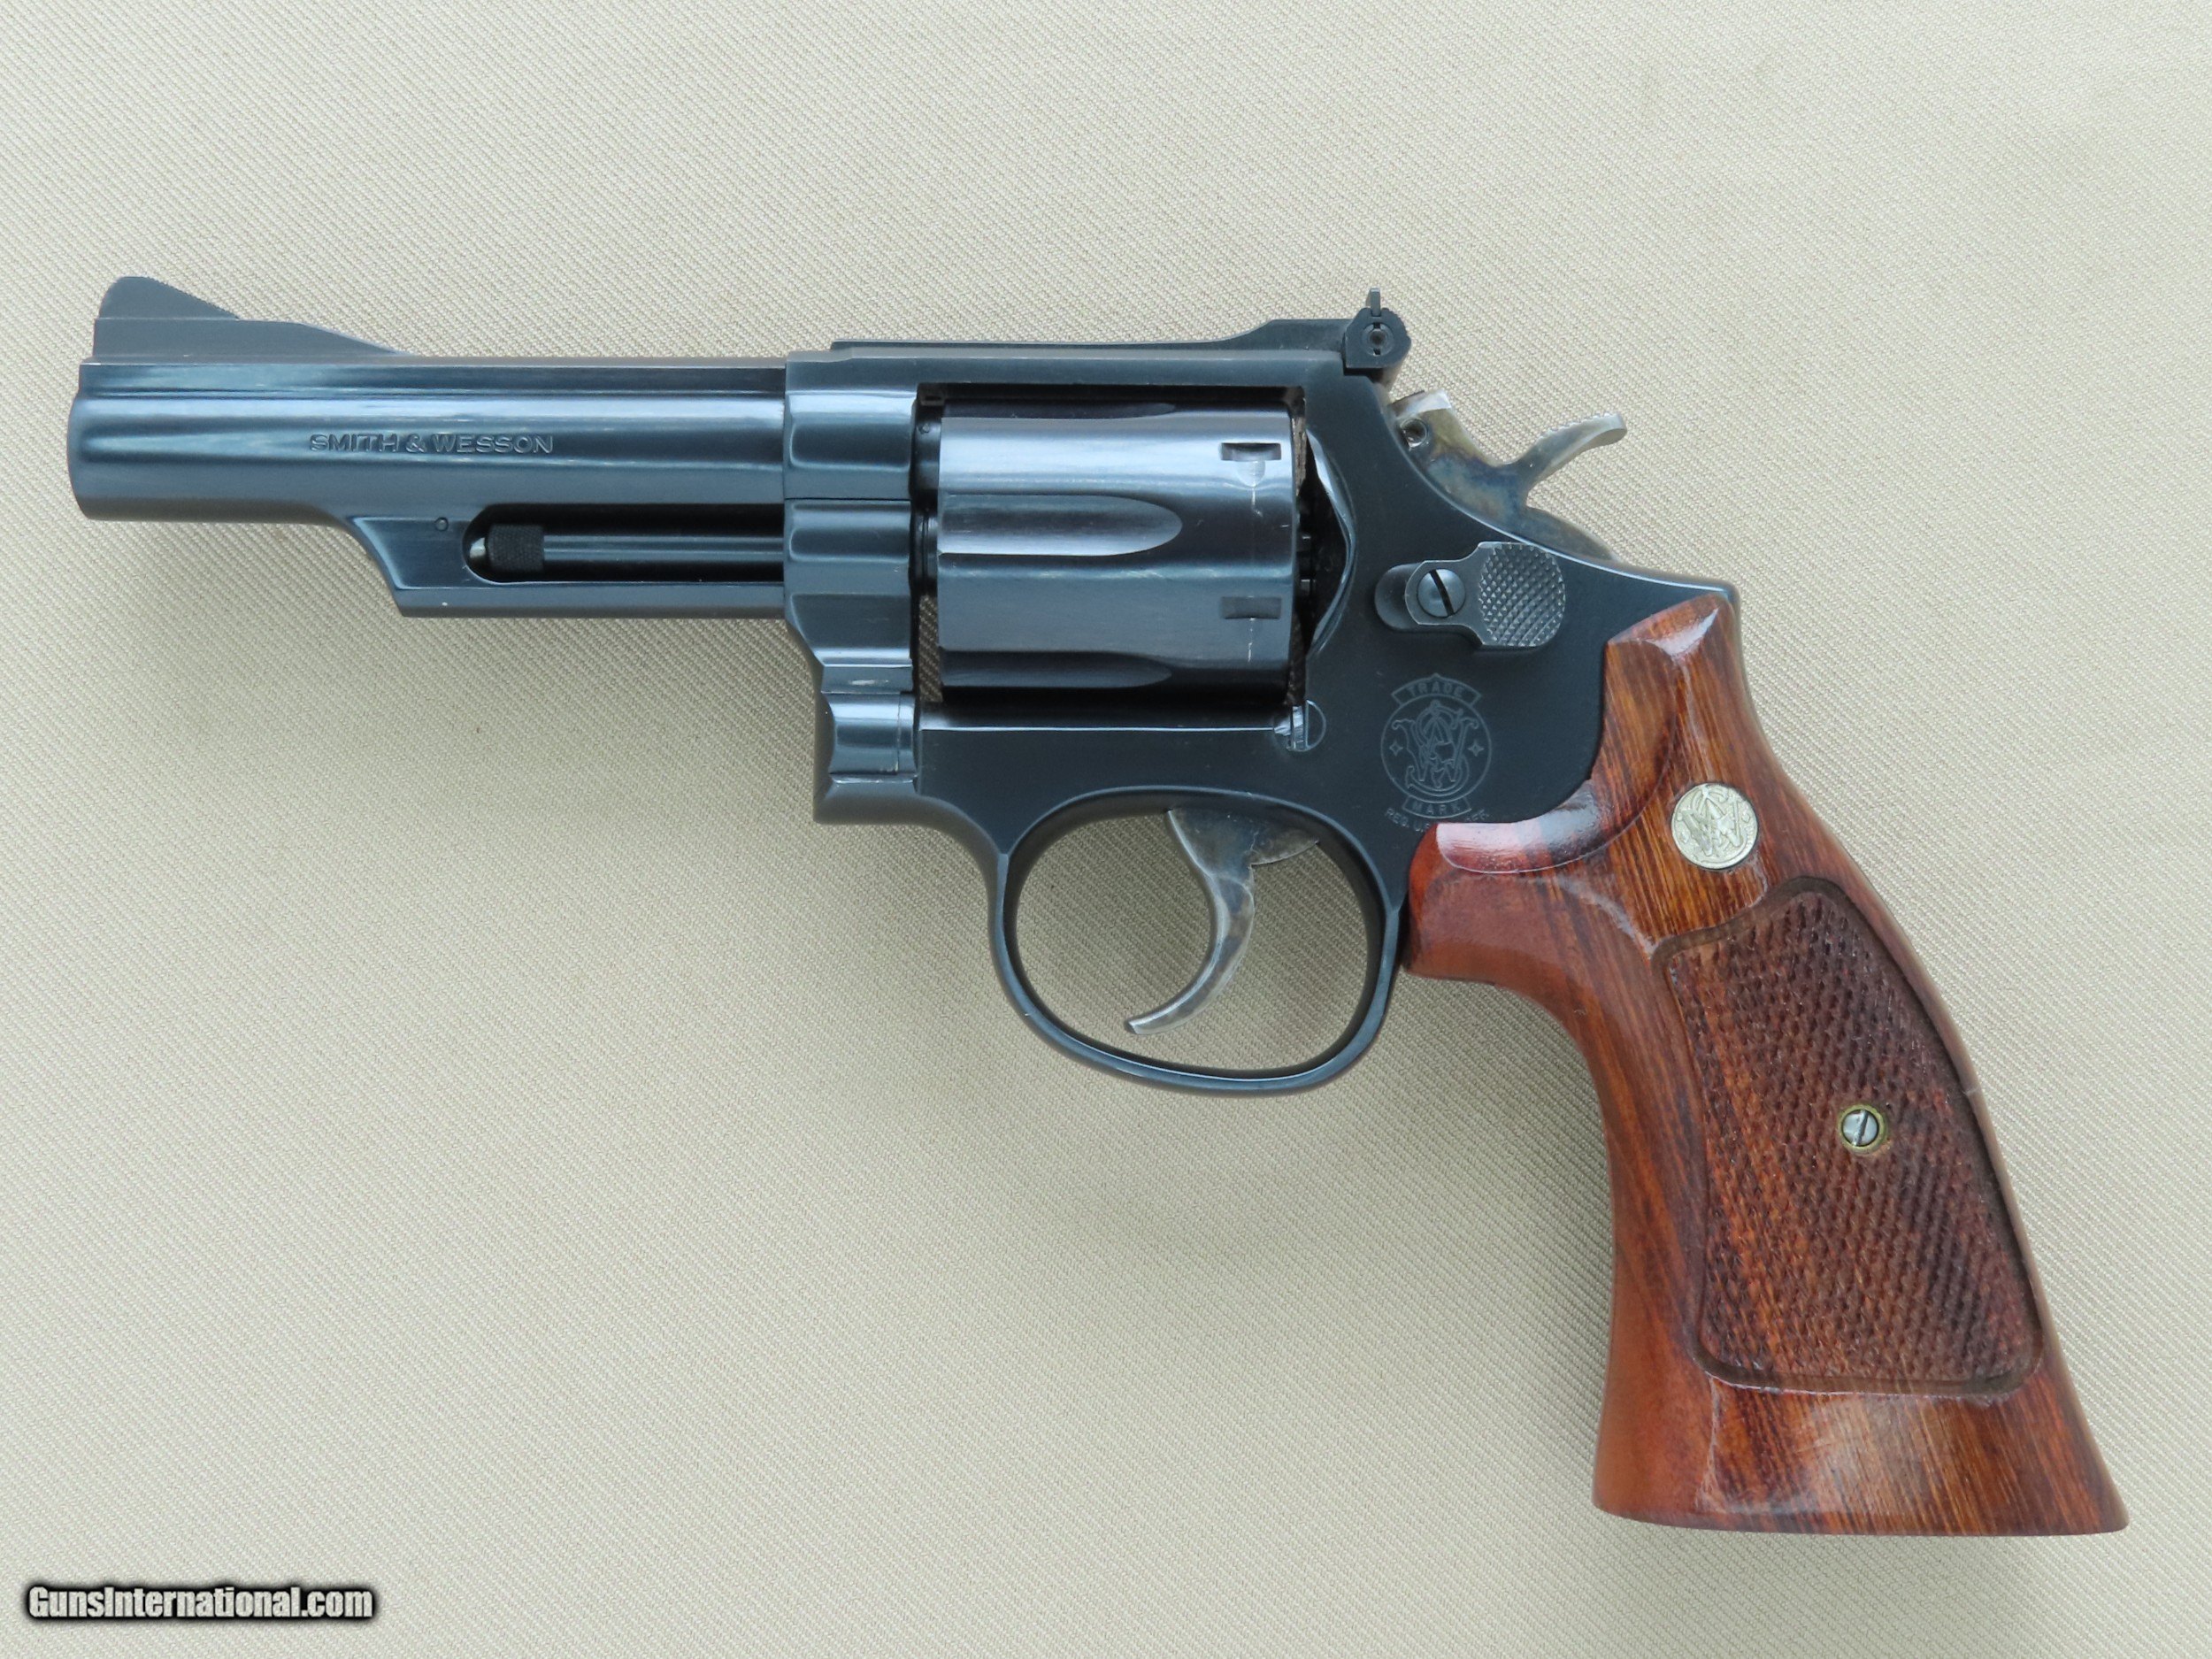 1984 Vintage Smith & Wesson Model 19-5 .357 Magnum Revolver